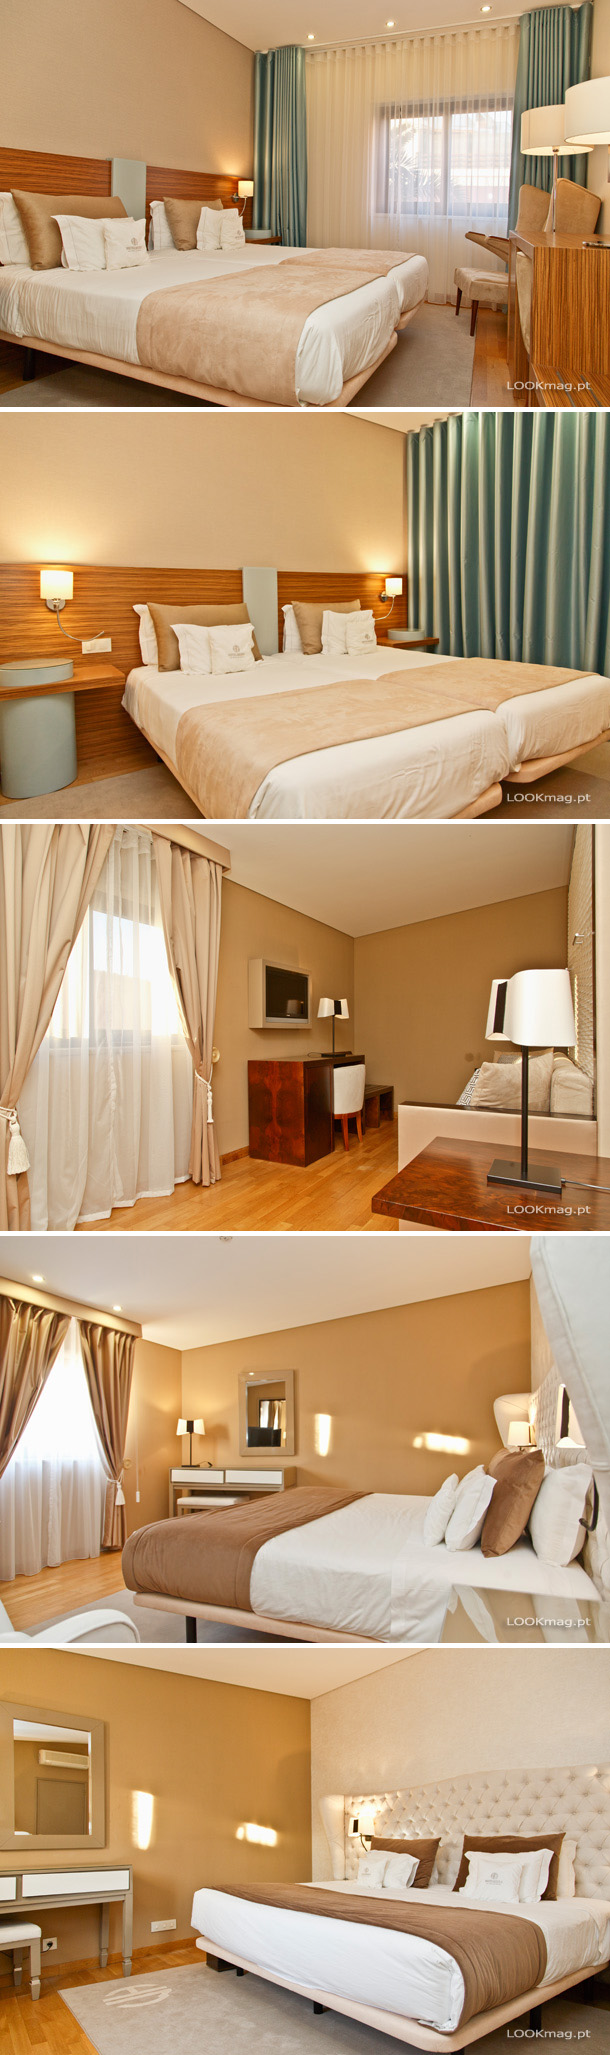 hotel_meira-lookmag_pt-11_15